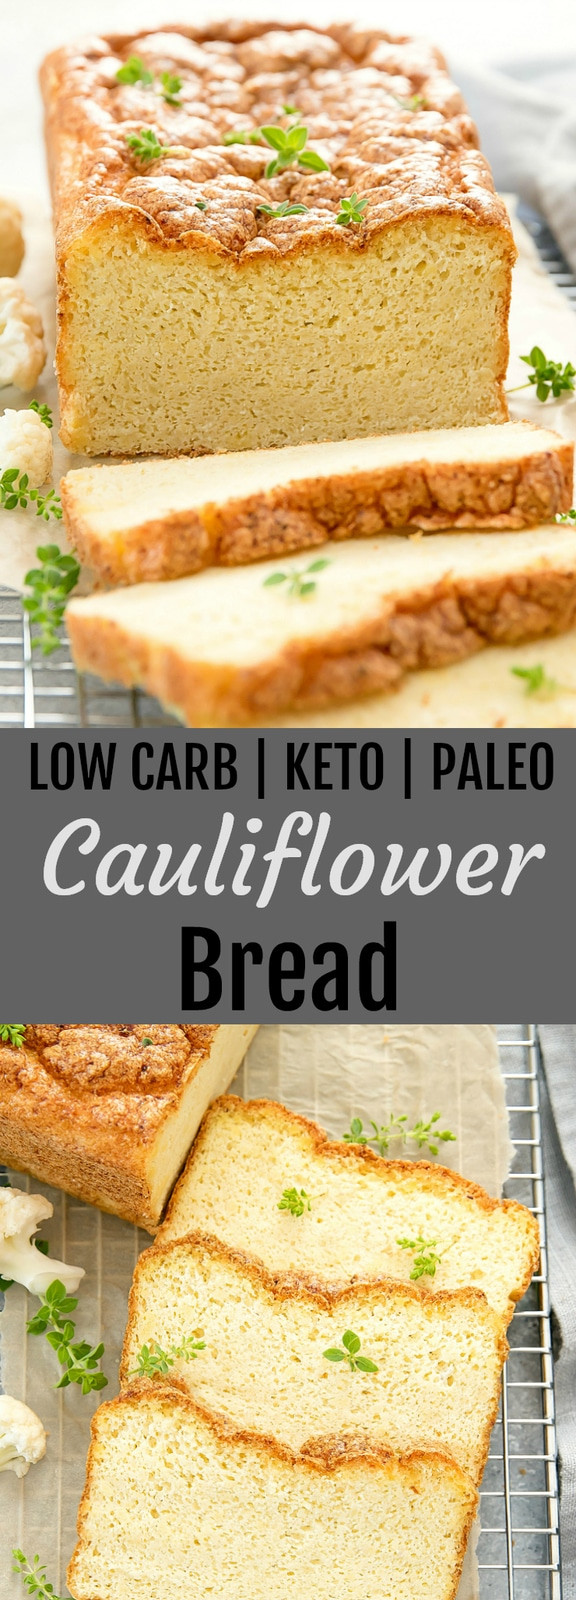 Cauliflower Sandwich Bread Recipe
 Cauliflower Bread Kirbie s Cravings